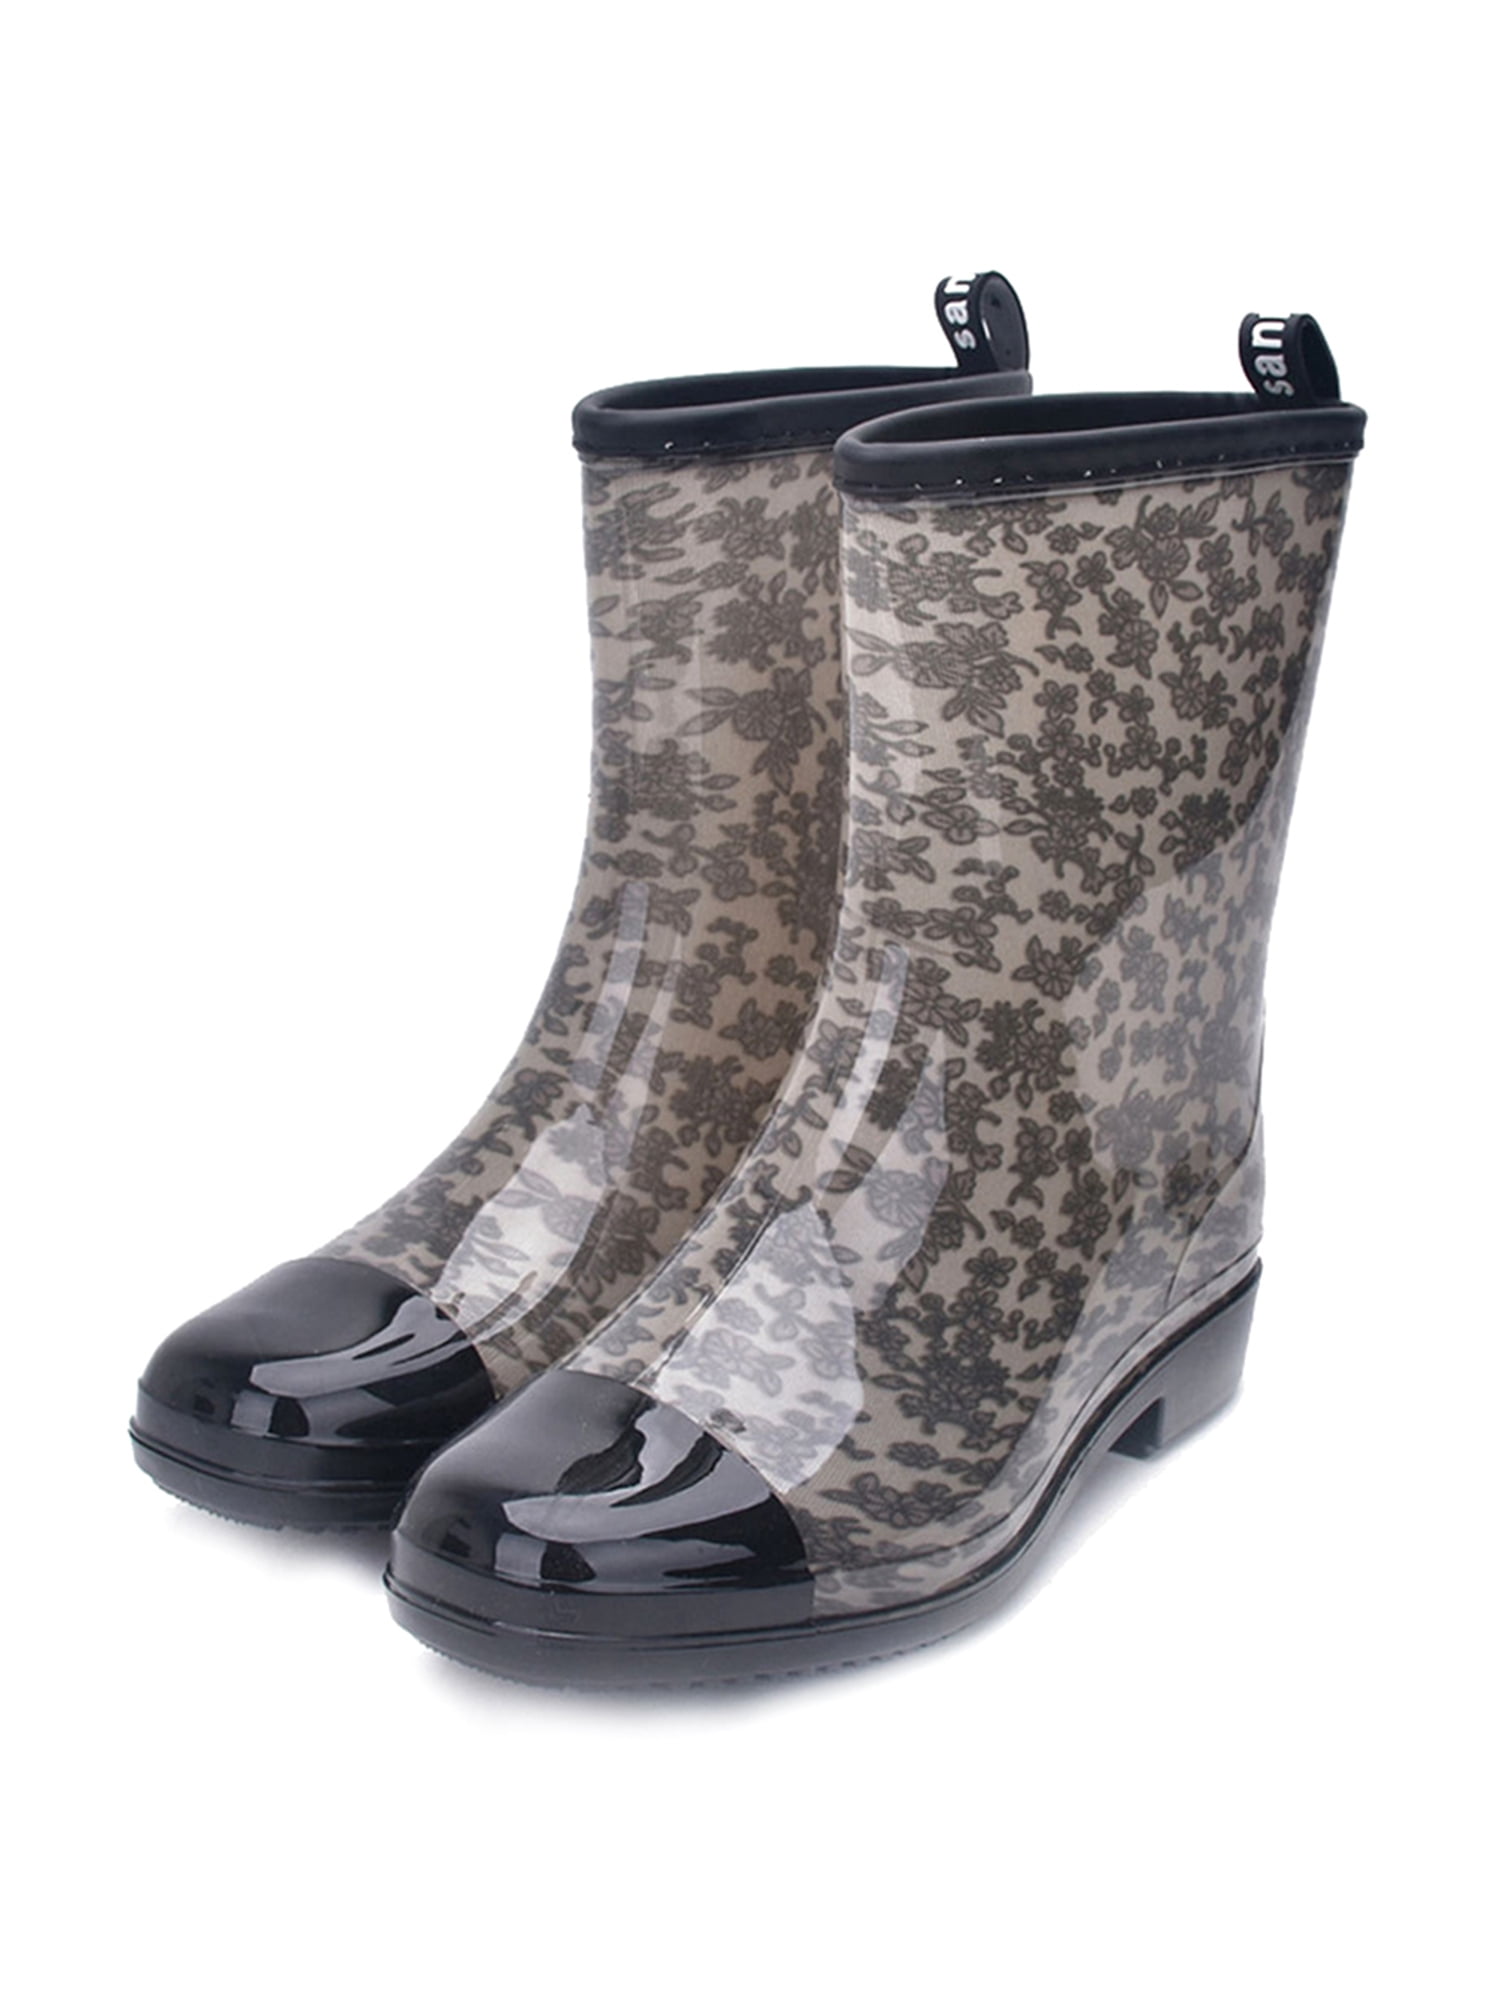 Wellington Boots Womens Flat Welly Ladies Rain Boots Waterproof Non Slip Low Block Heel Shoes Wellies Slip On 3.5 cm Muck Yard Black Blue 3.5-9 UK 